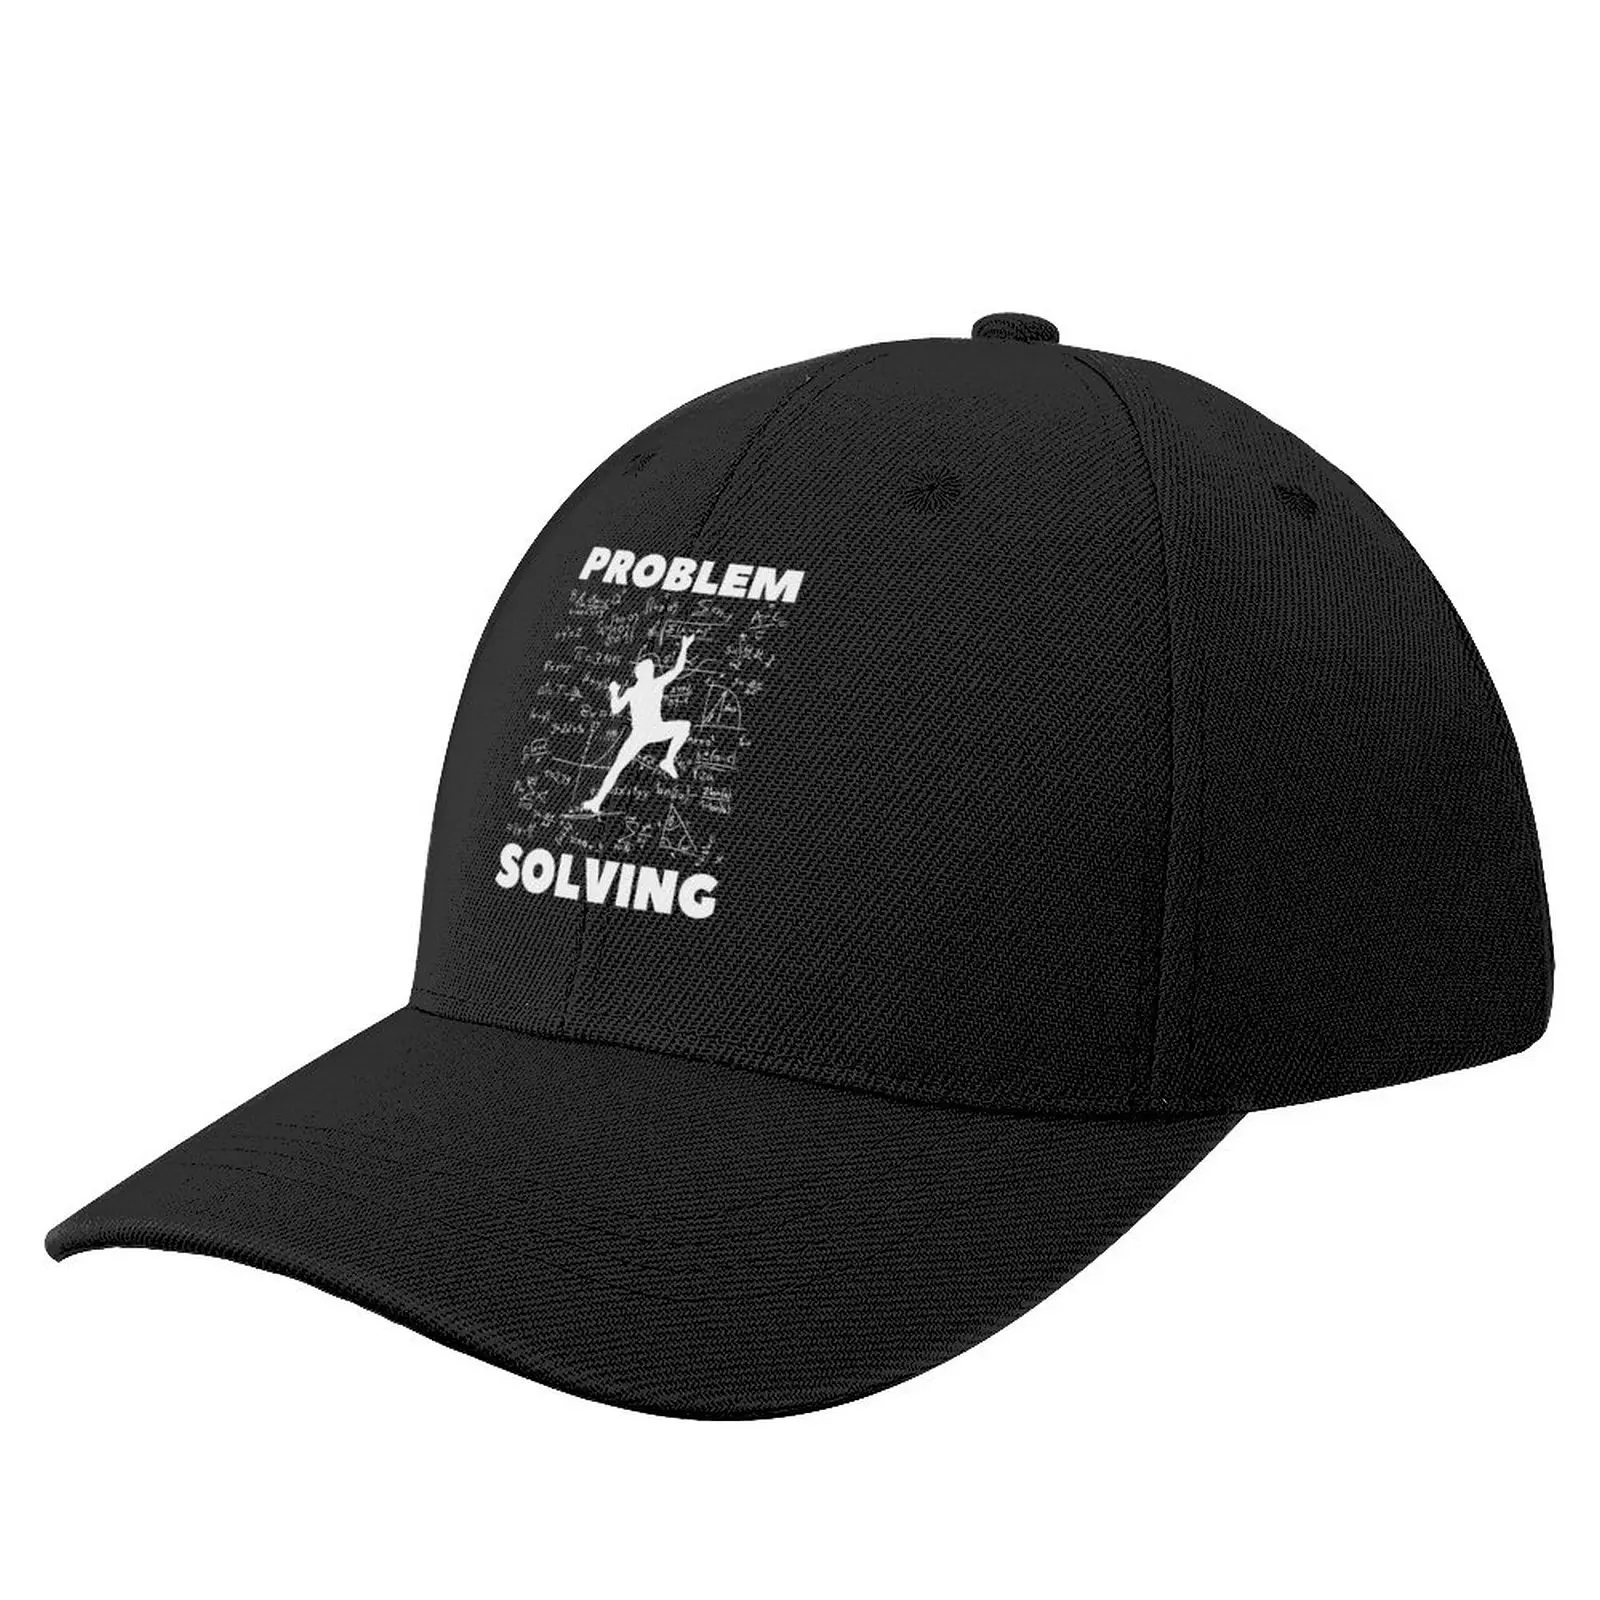 

Problem Solving. Rock Climbing. Bouldering Baseball Cap Sports Caps New In The Hat Snapback Cap hard hat Man Cap Women's